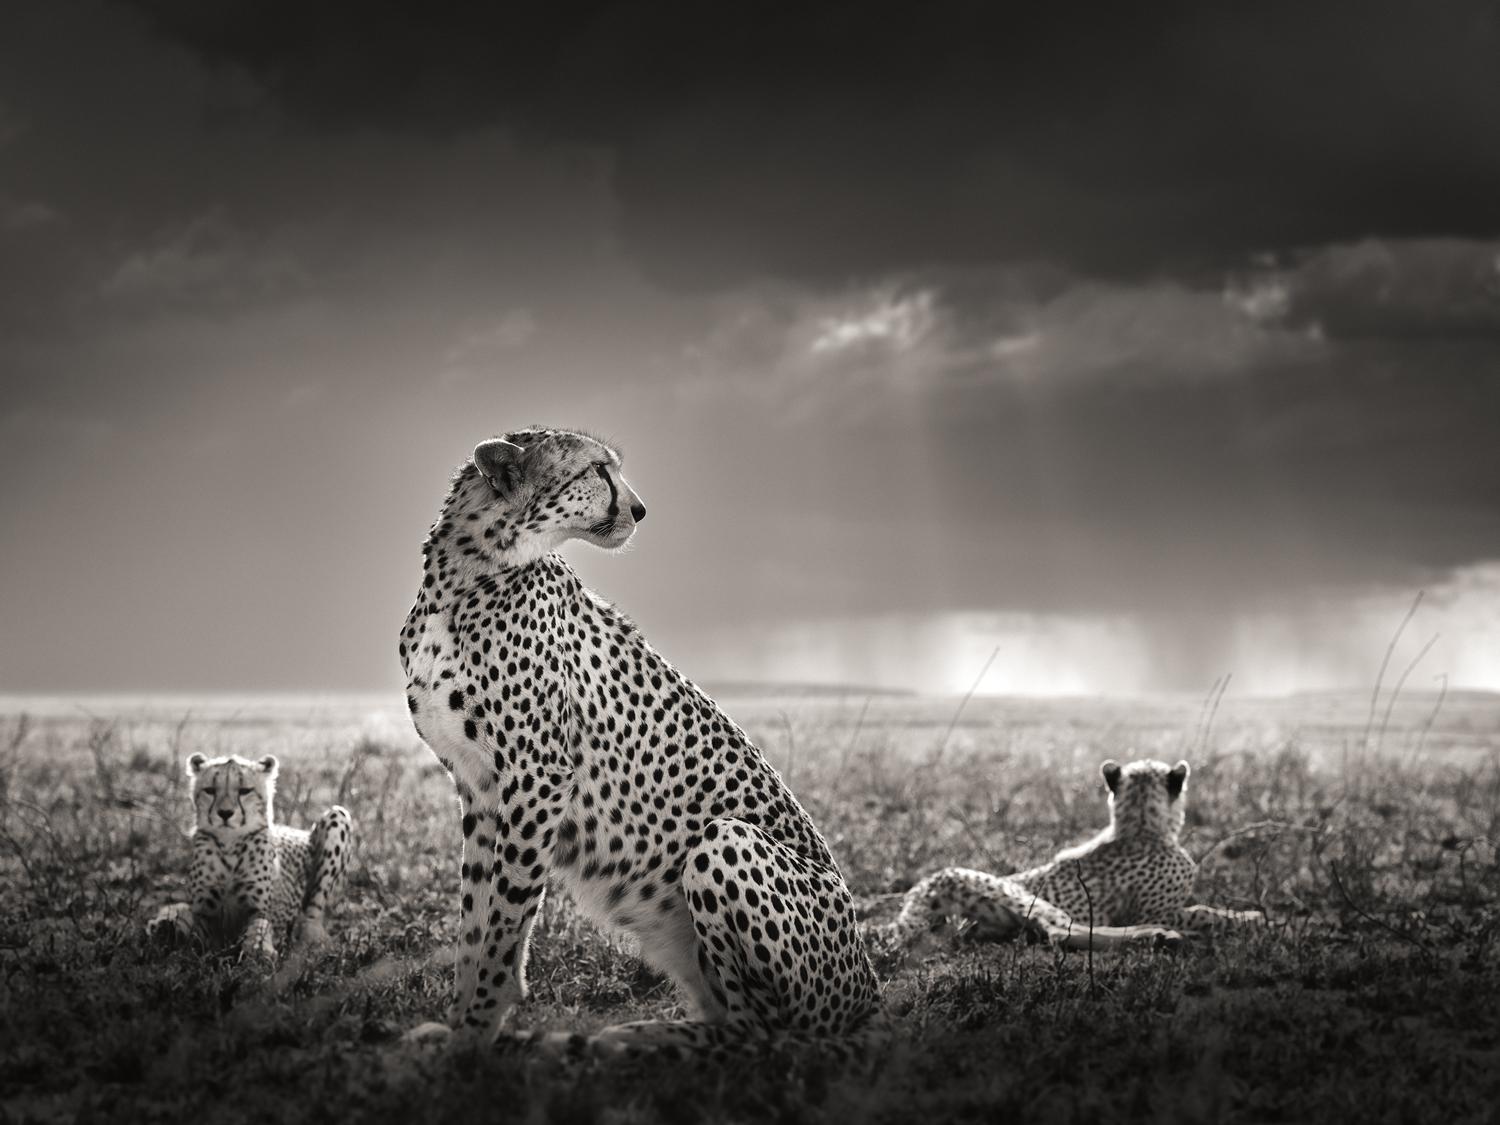 Joachim Schmeisser Portrait Photograph - Black Tears II, animal, wildlife, black and white photography, cheetah